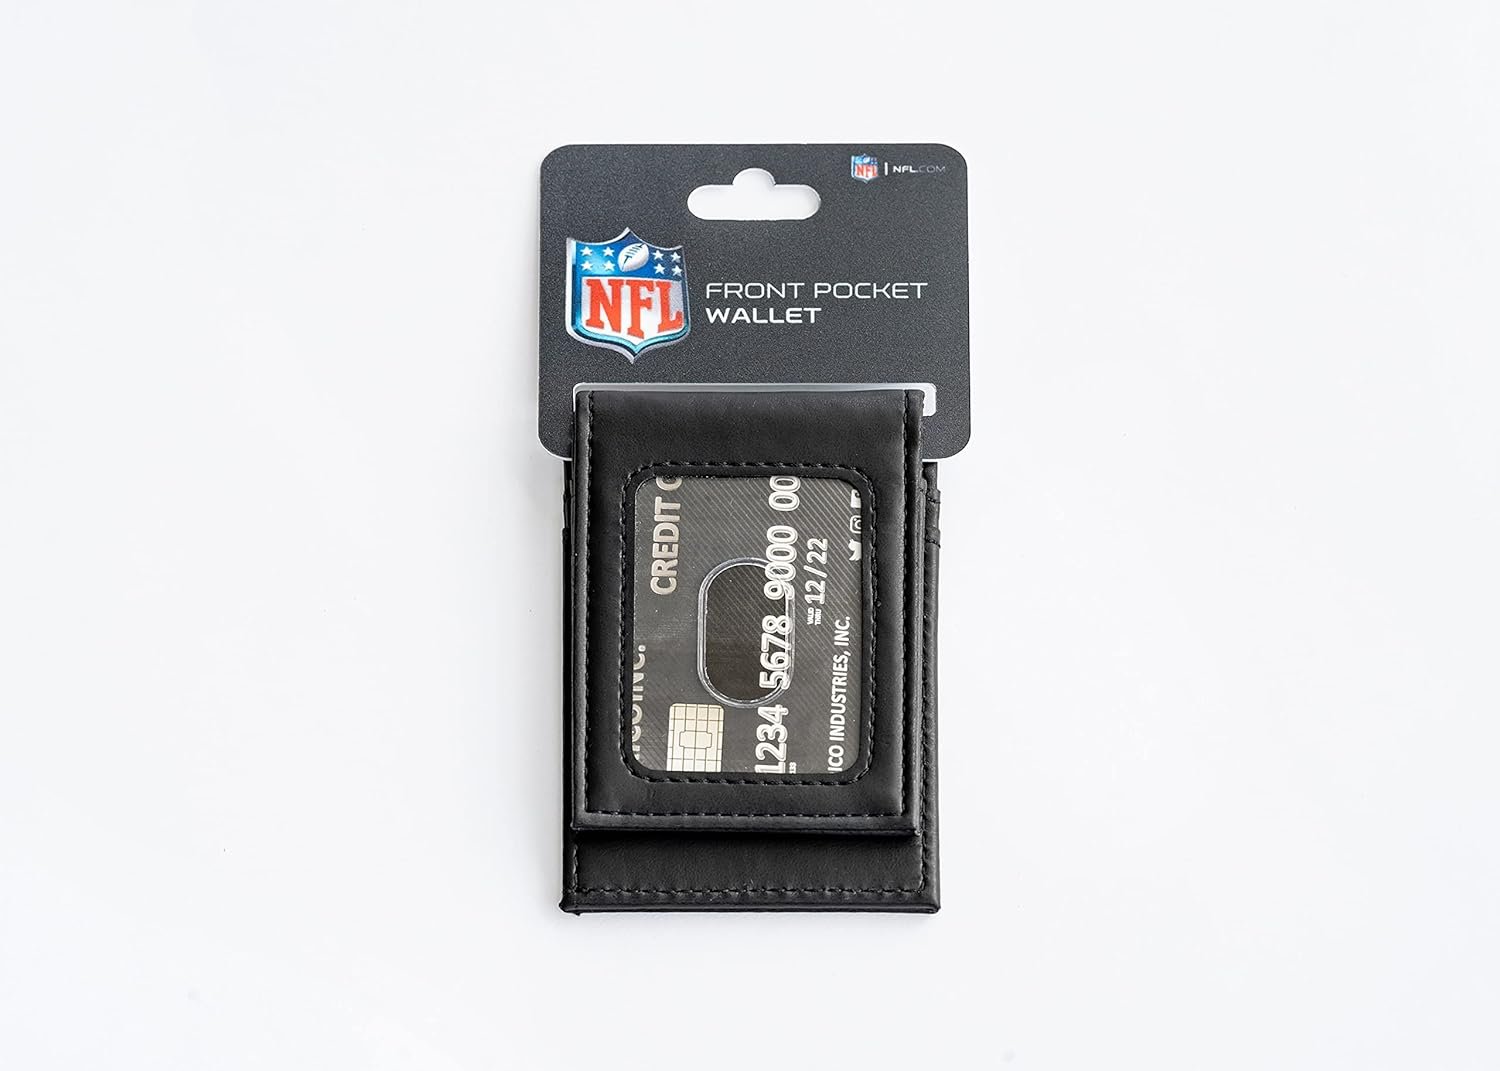 Green Bay Packers Premium Black Leather Wallet, Front Pocket Magnetic Money Clip, Laser Engraved, Vegan